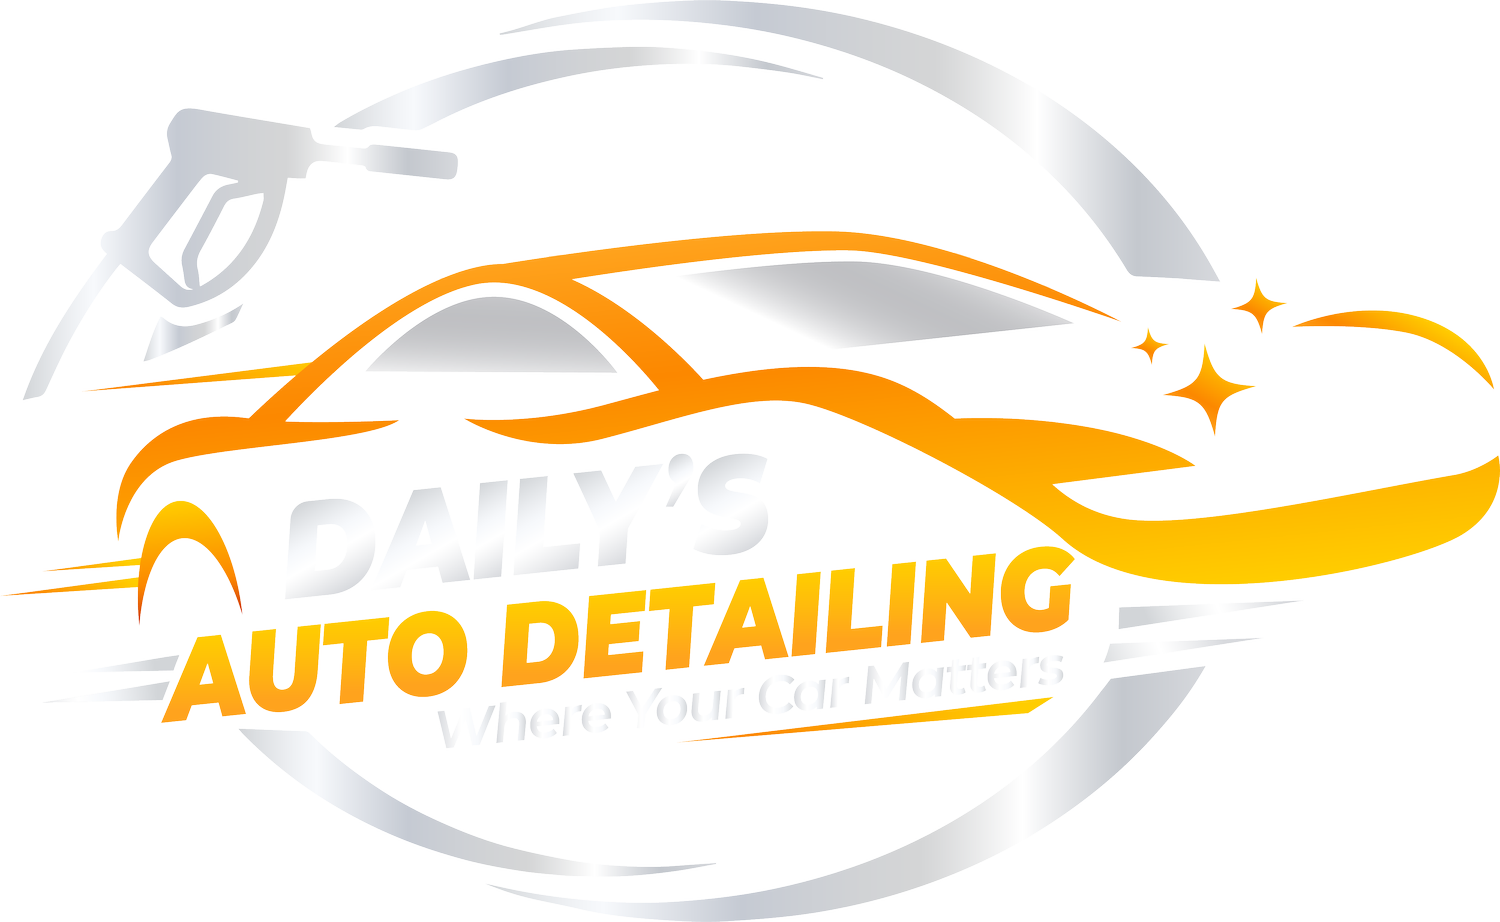 Dailys Auto Detailing